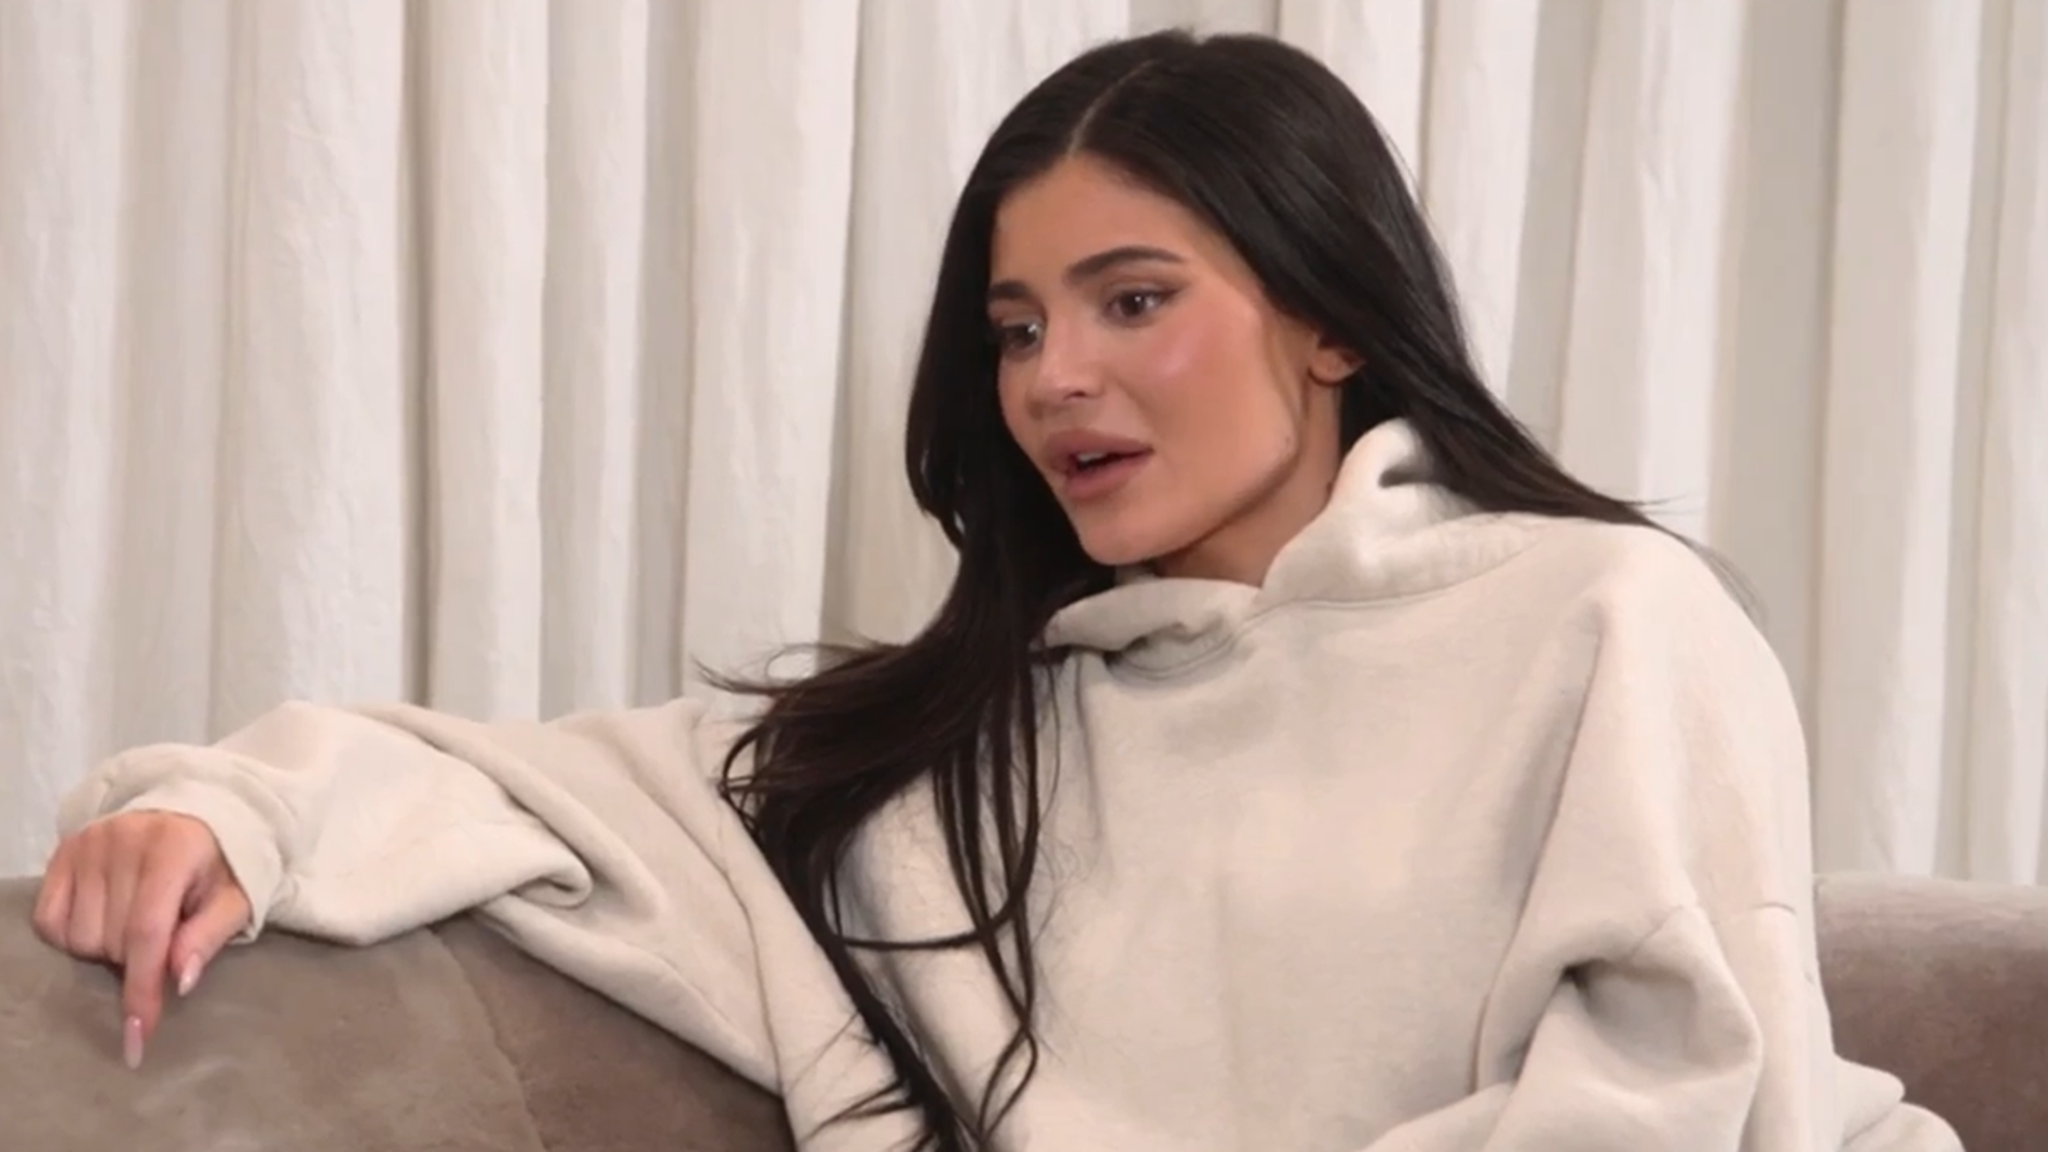 Kylie Jenner Sparks Boob Job Rumors on Her 20th Birthday — See